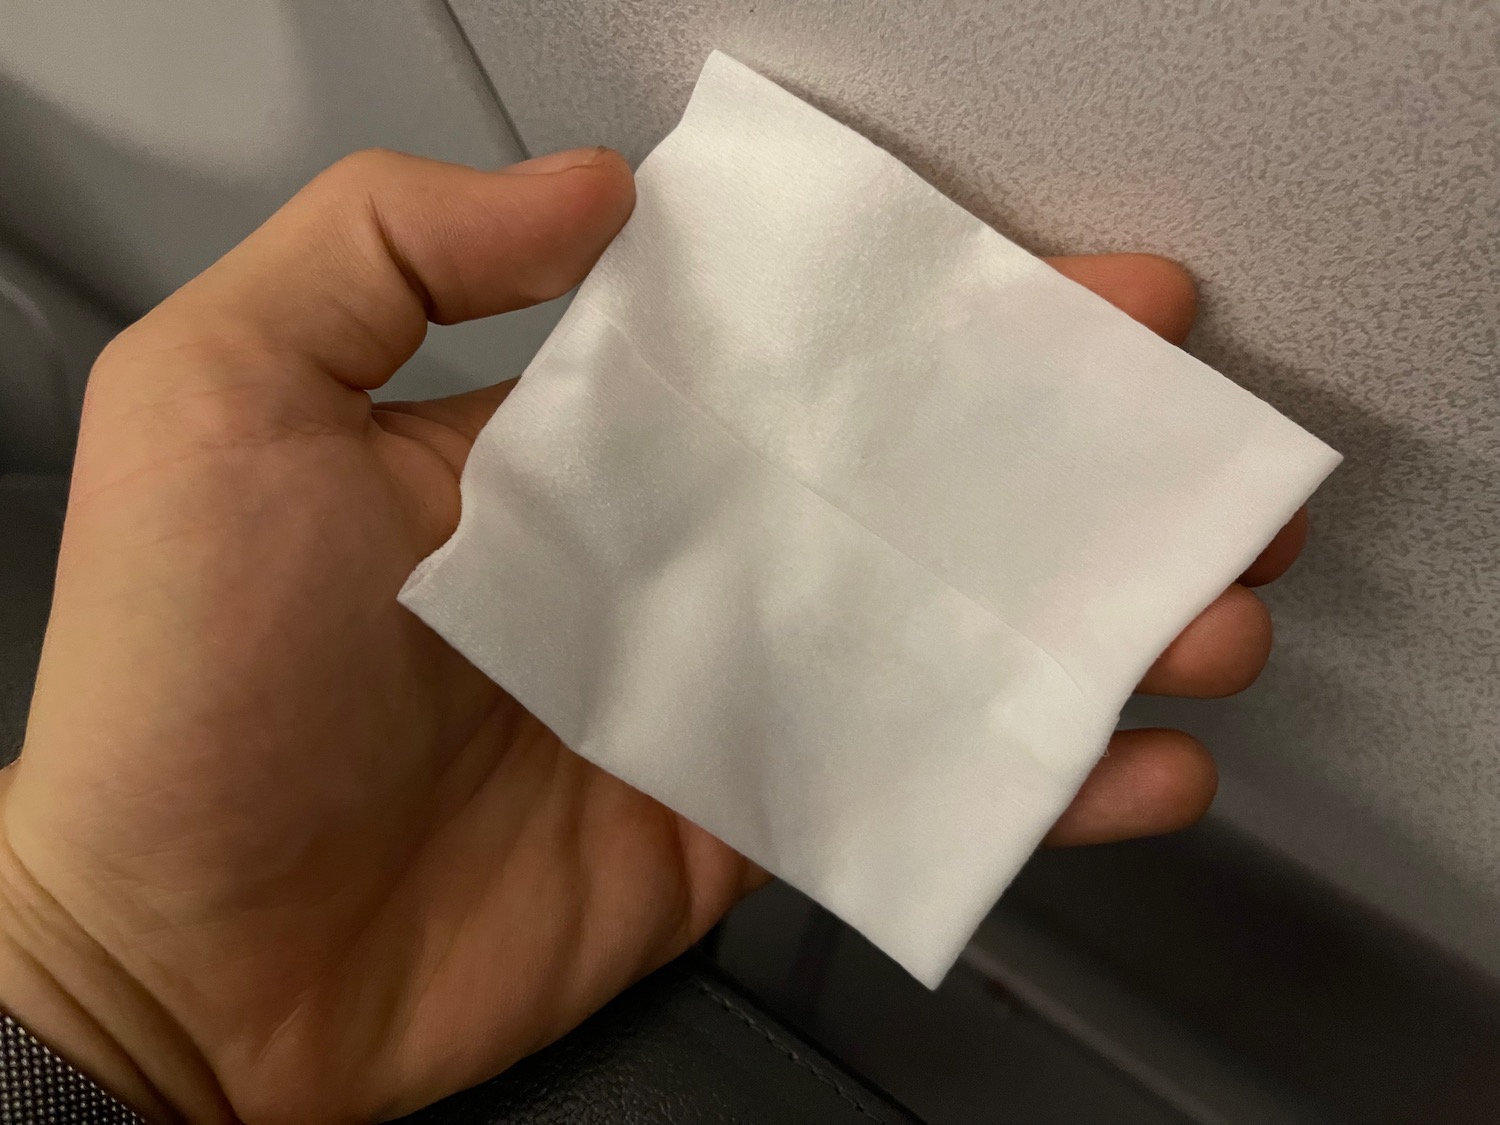 a hand holding a white napkin